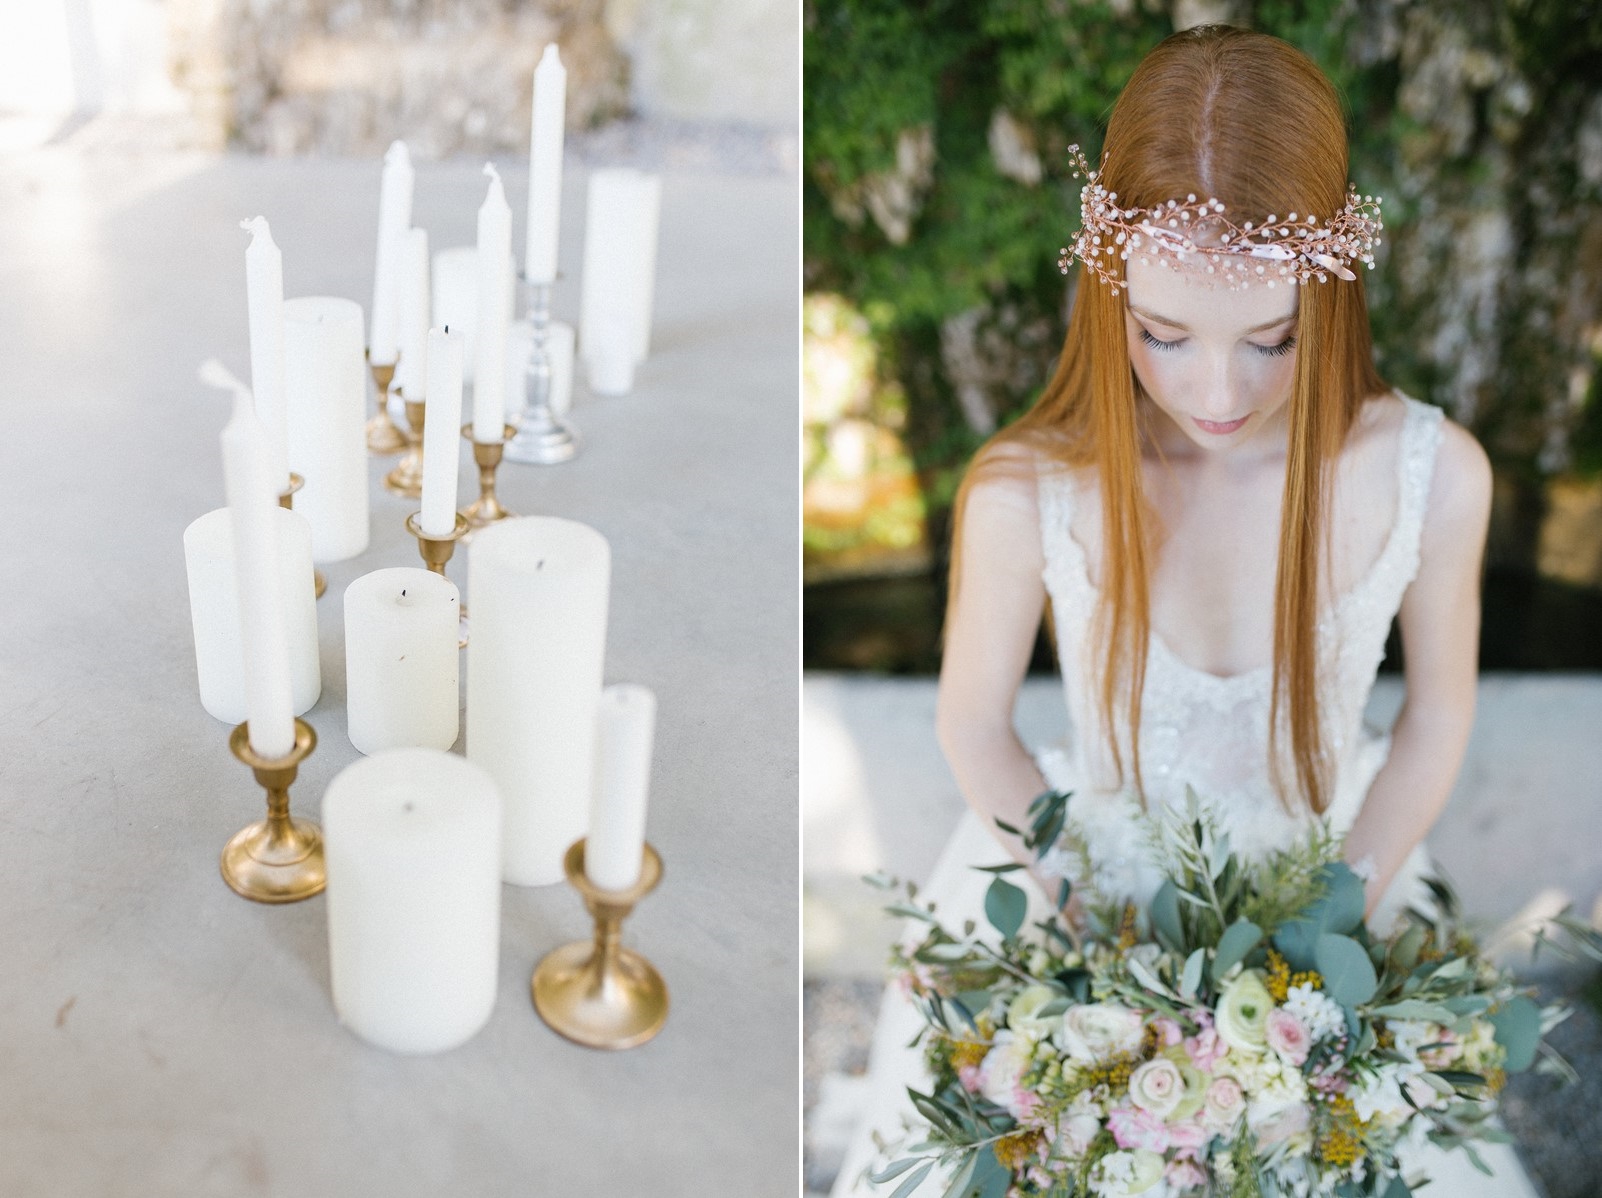 Fairytale Bride & Wedding Candles